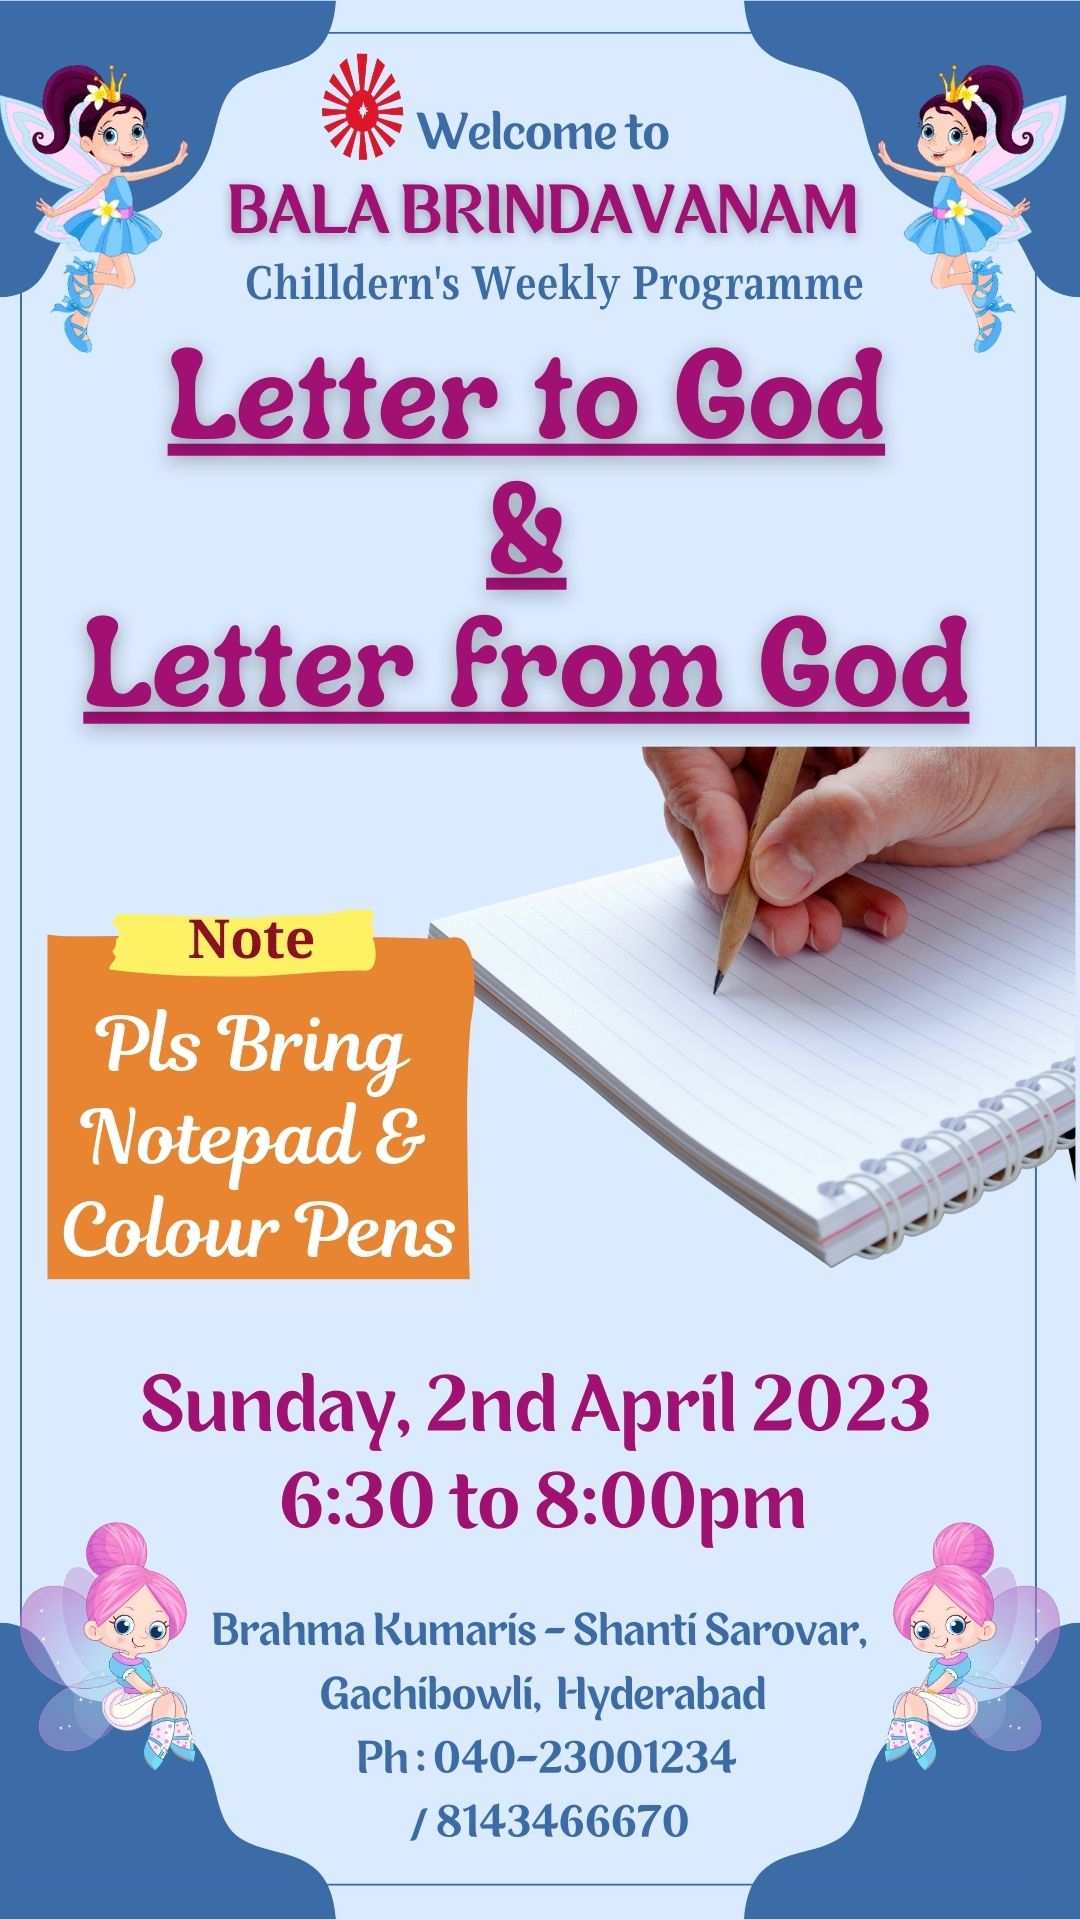 Letter to god & letter from god